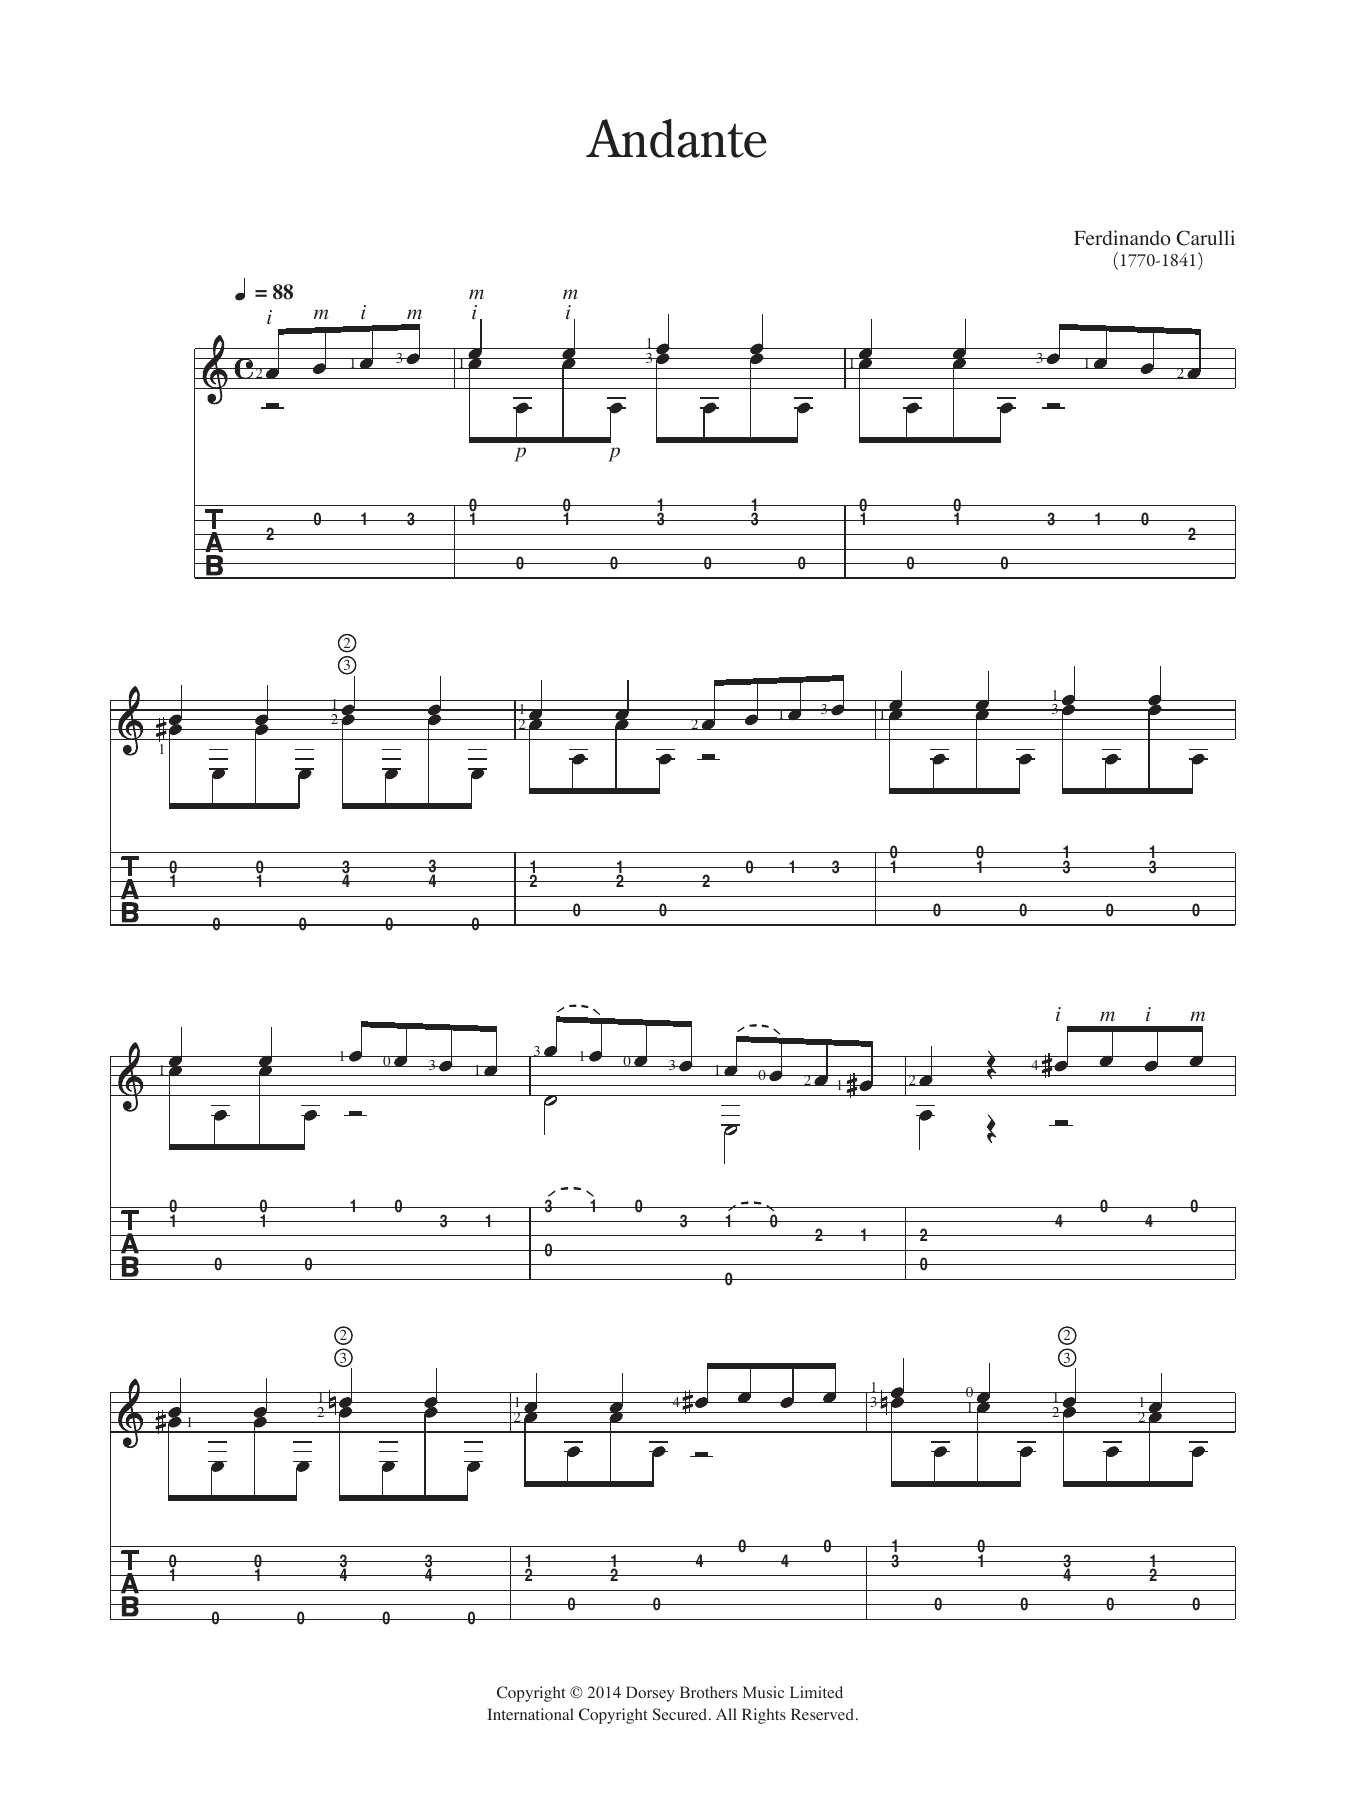 Ferdinando Carulli Andante Sheet Music Notes & Chords for Guitar - Download or Print PDF